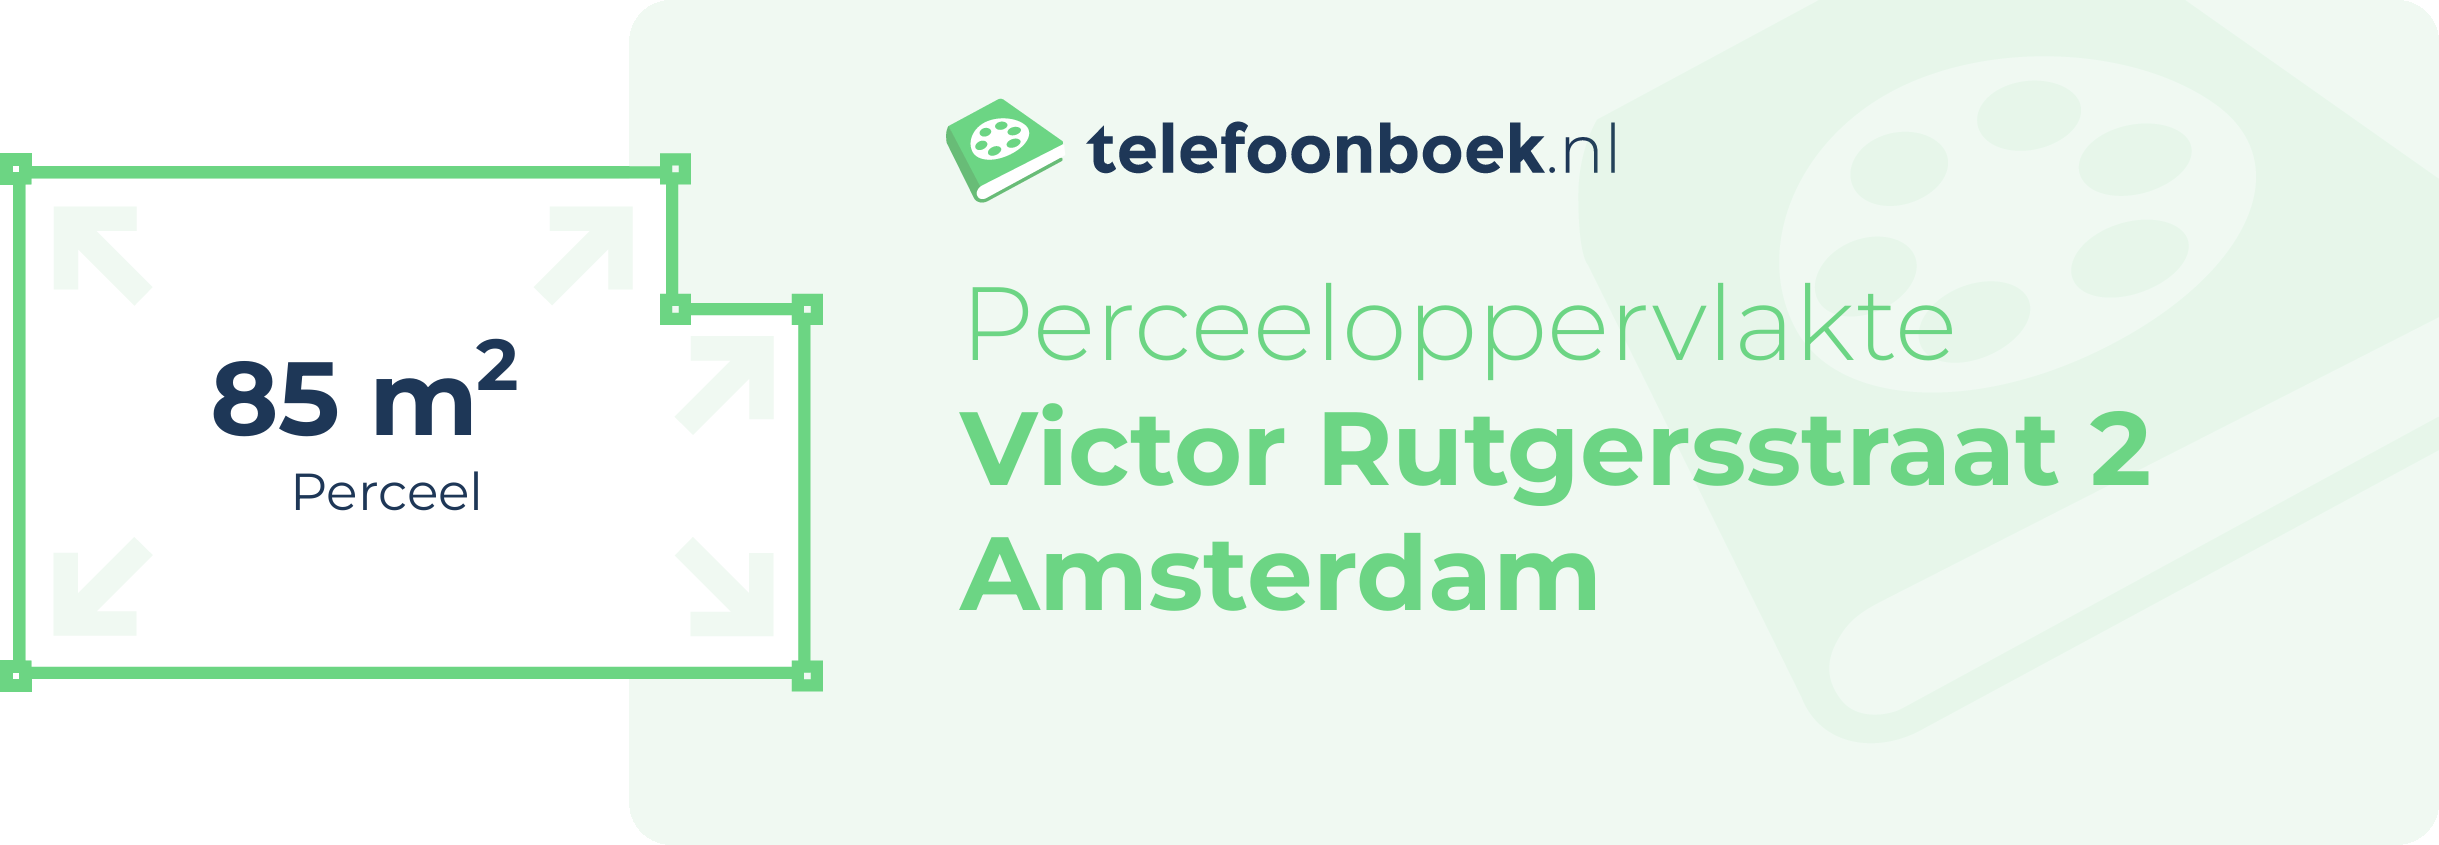 Perceeloppervlakte Victor Rutgersstraat 2 Amsterdam